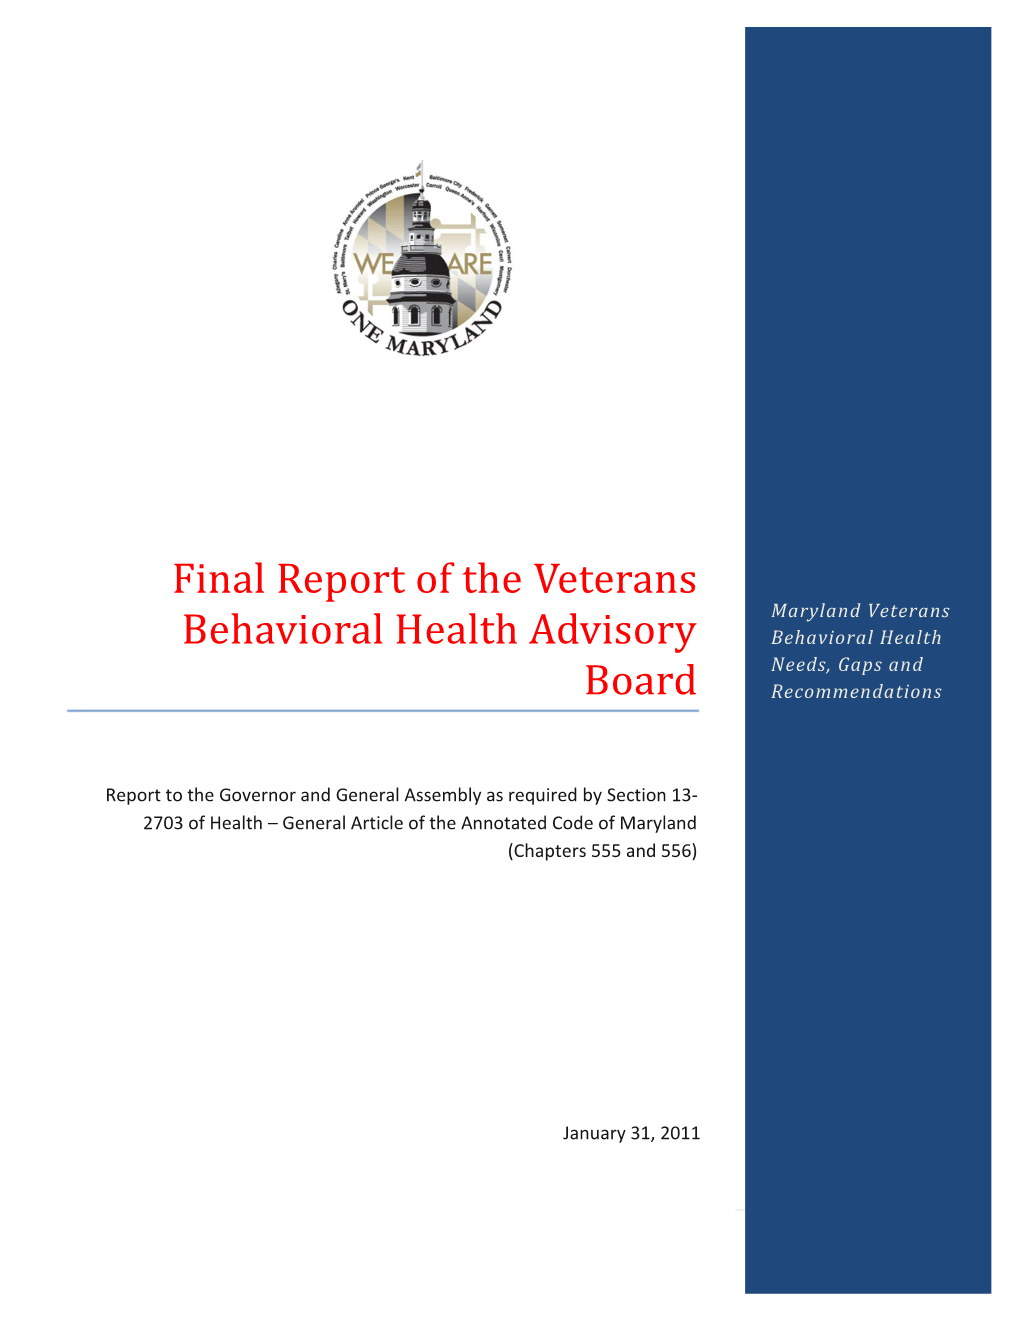 Final Report of the Veterans Behavioral Health Advisory Board